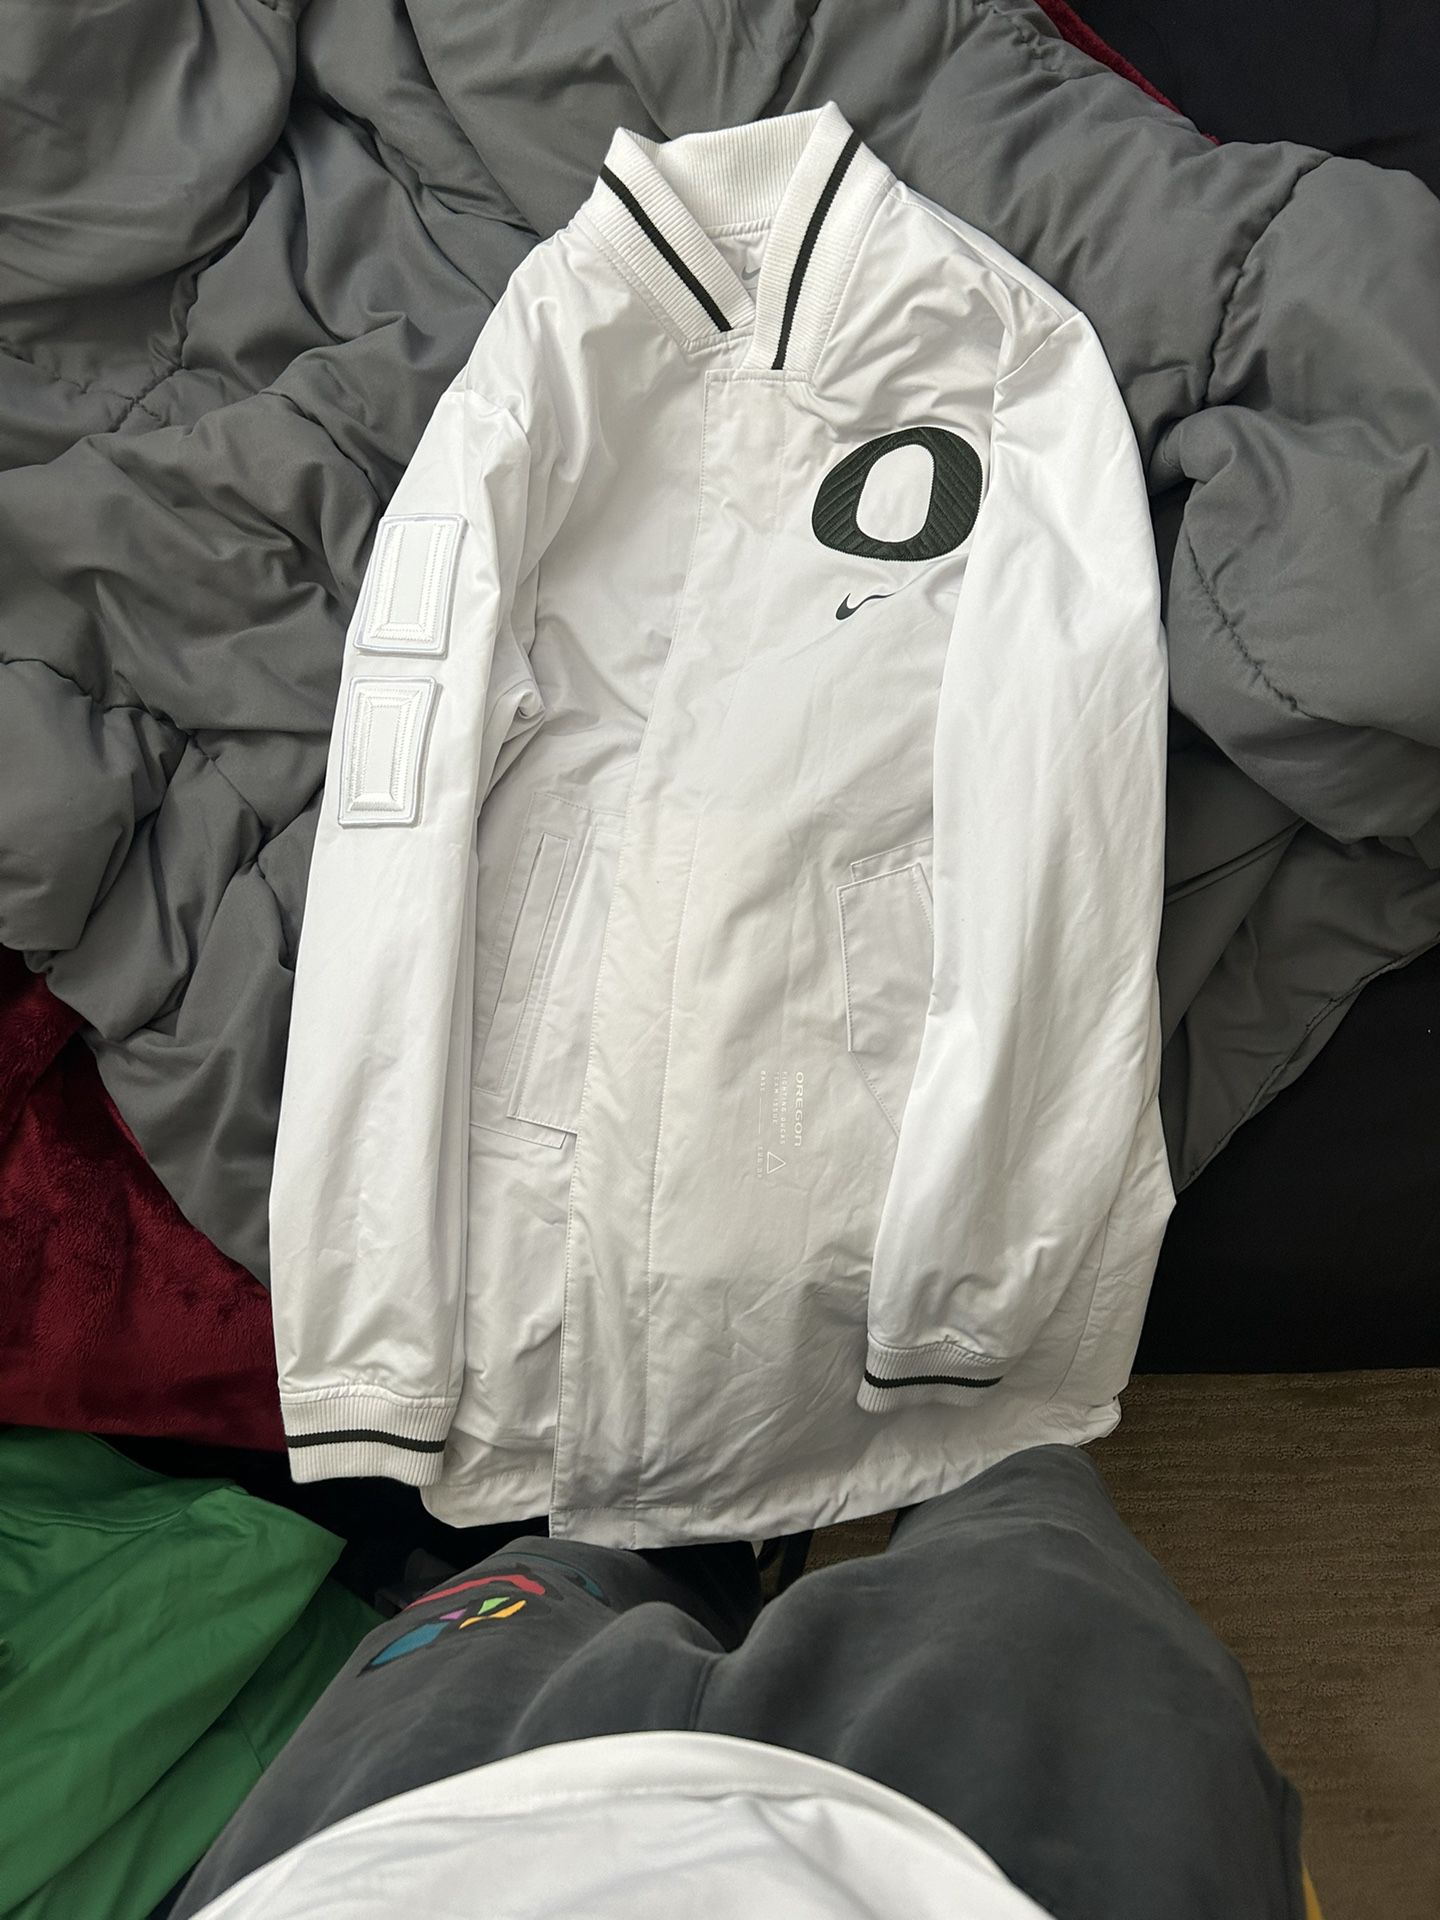 Oregon Player Issued Jacket 